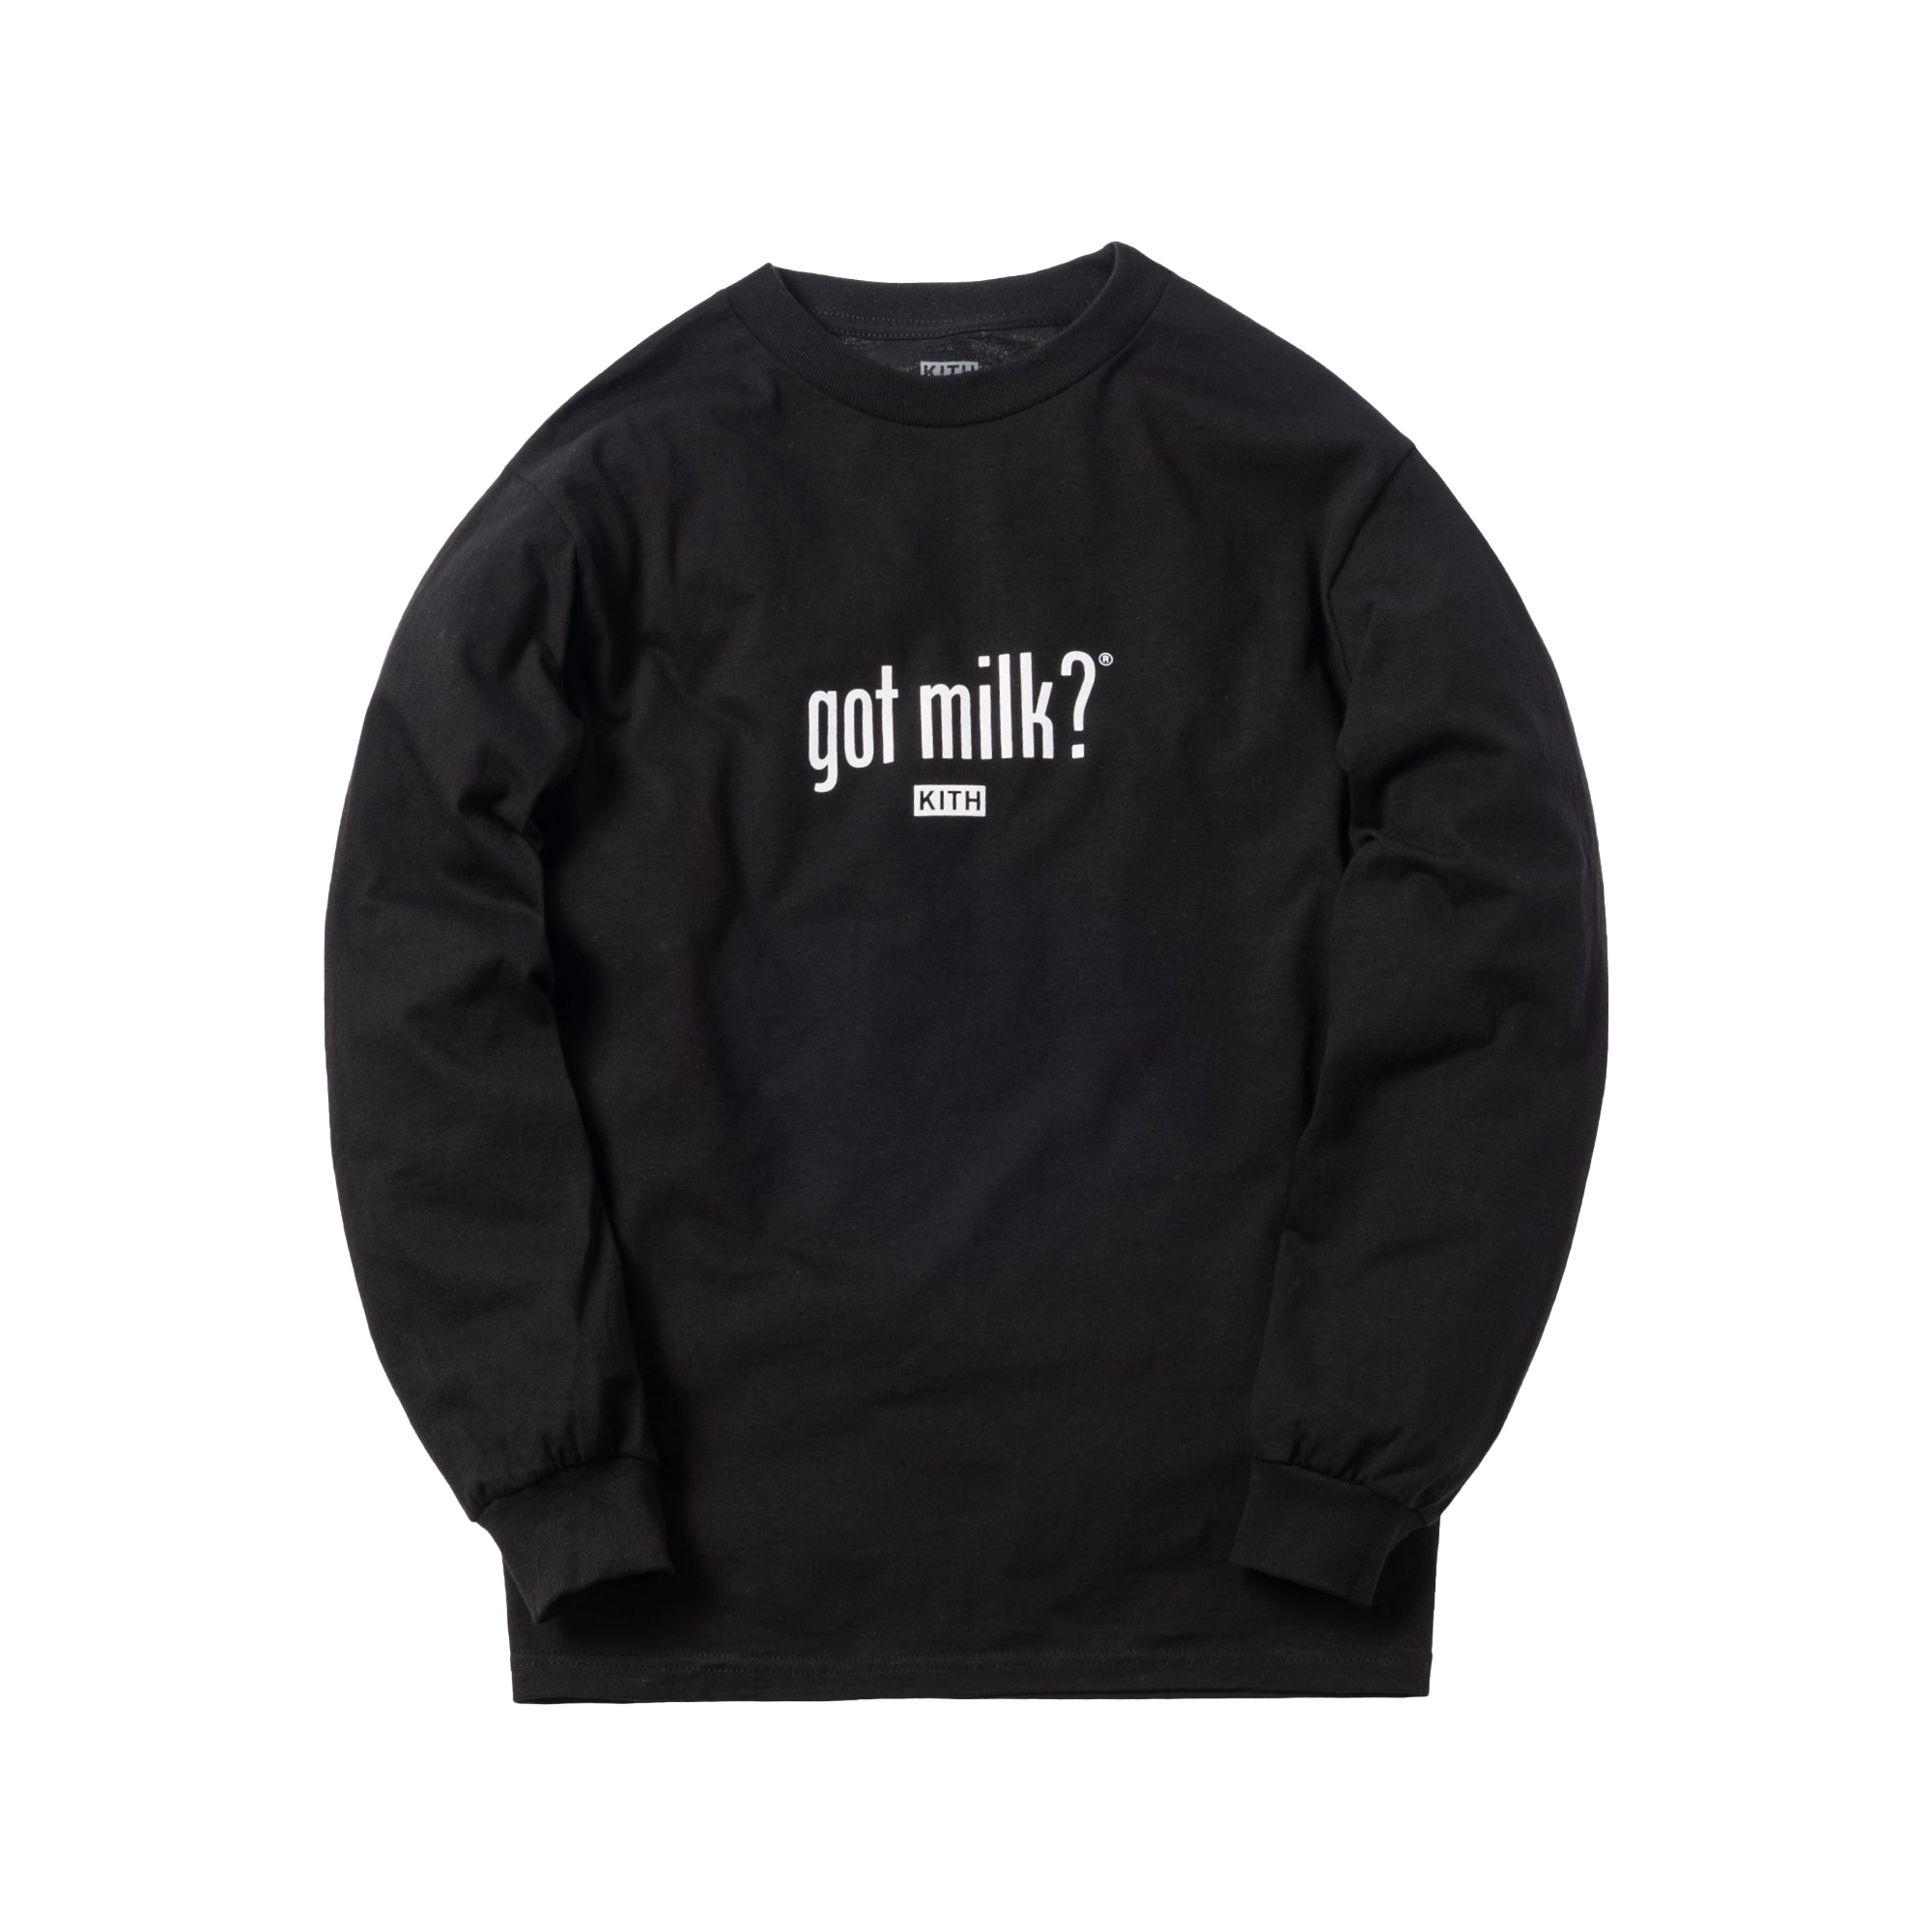 kith treats got milk t-shirt